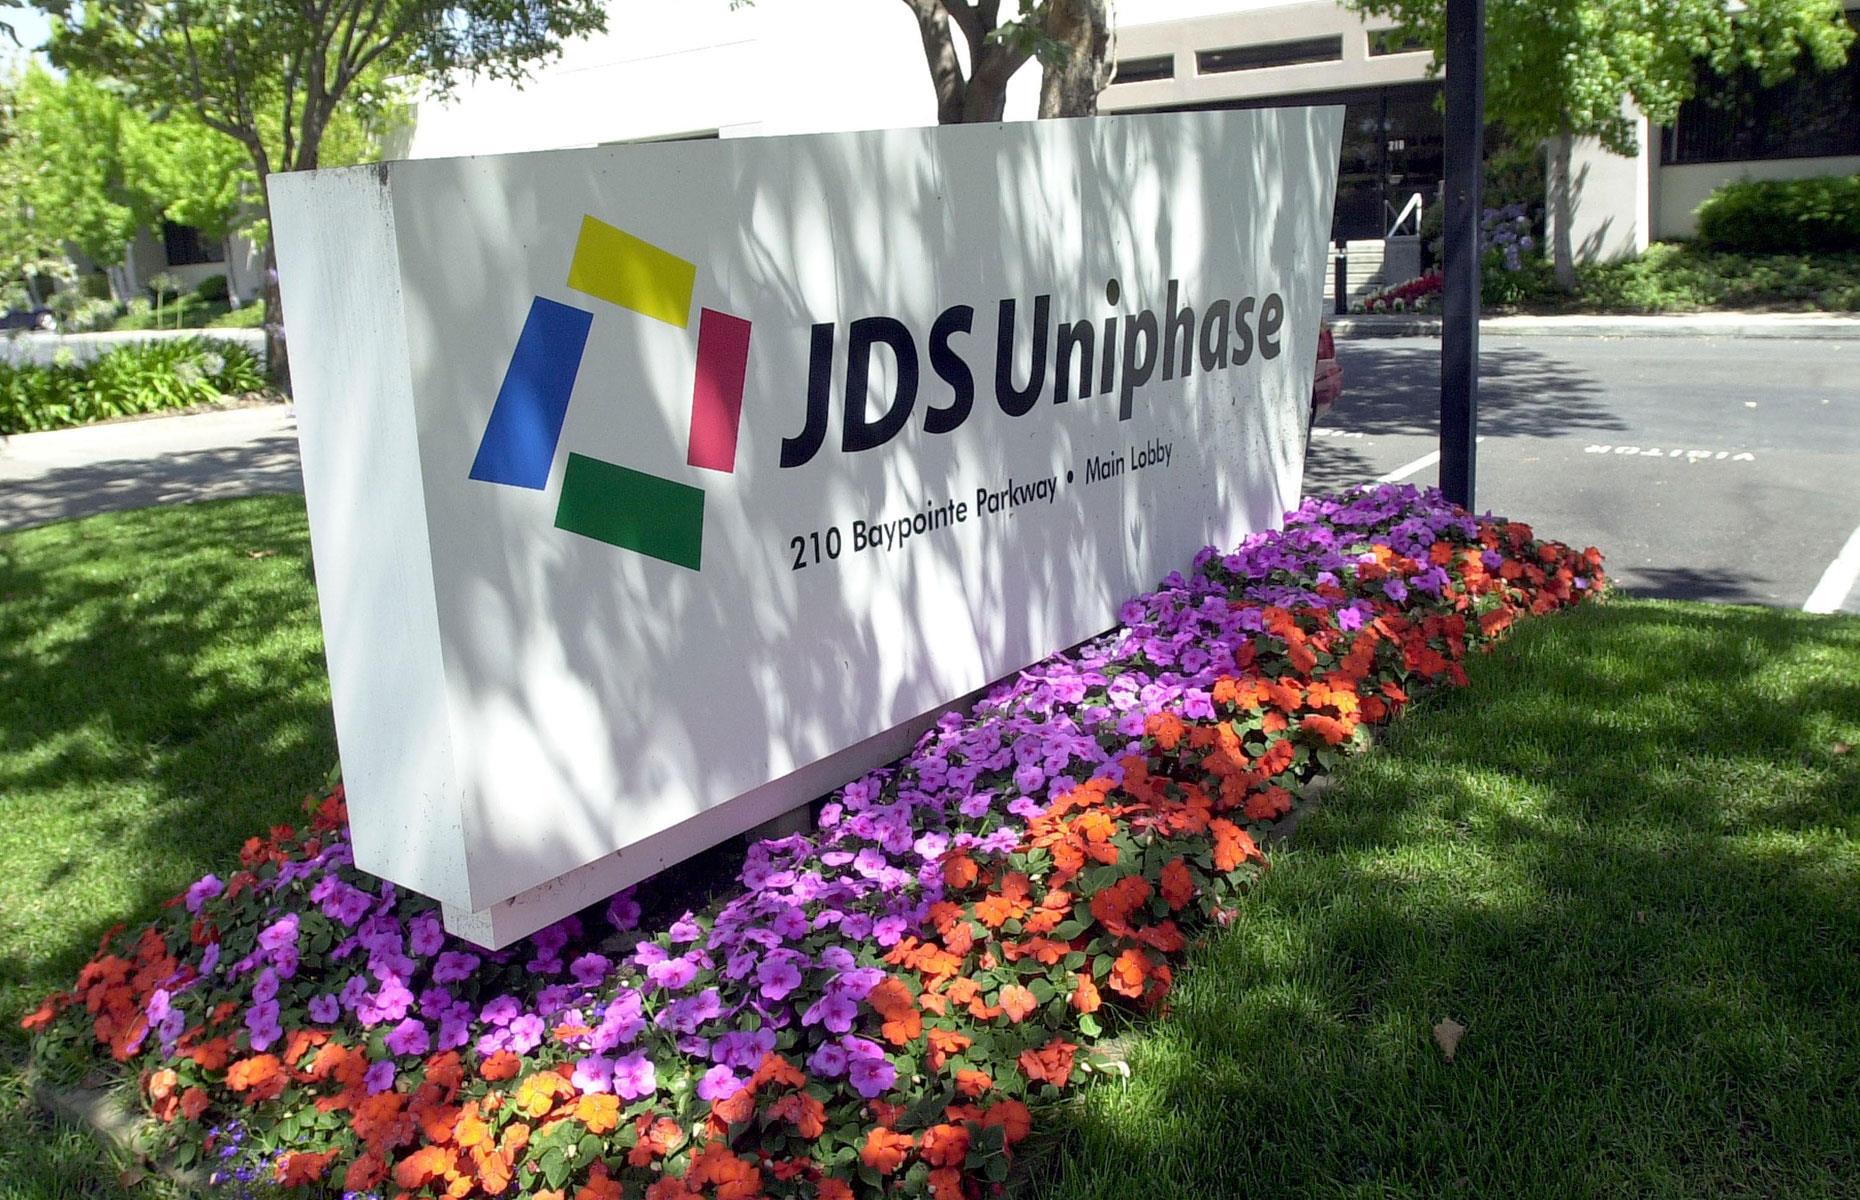 2001: JDS Uniphase